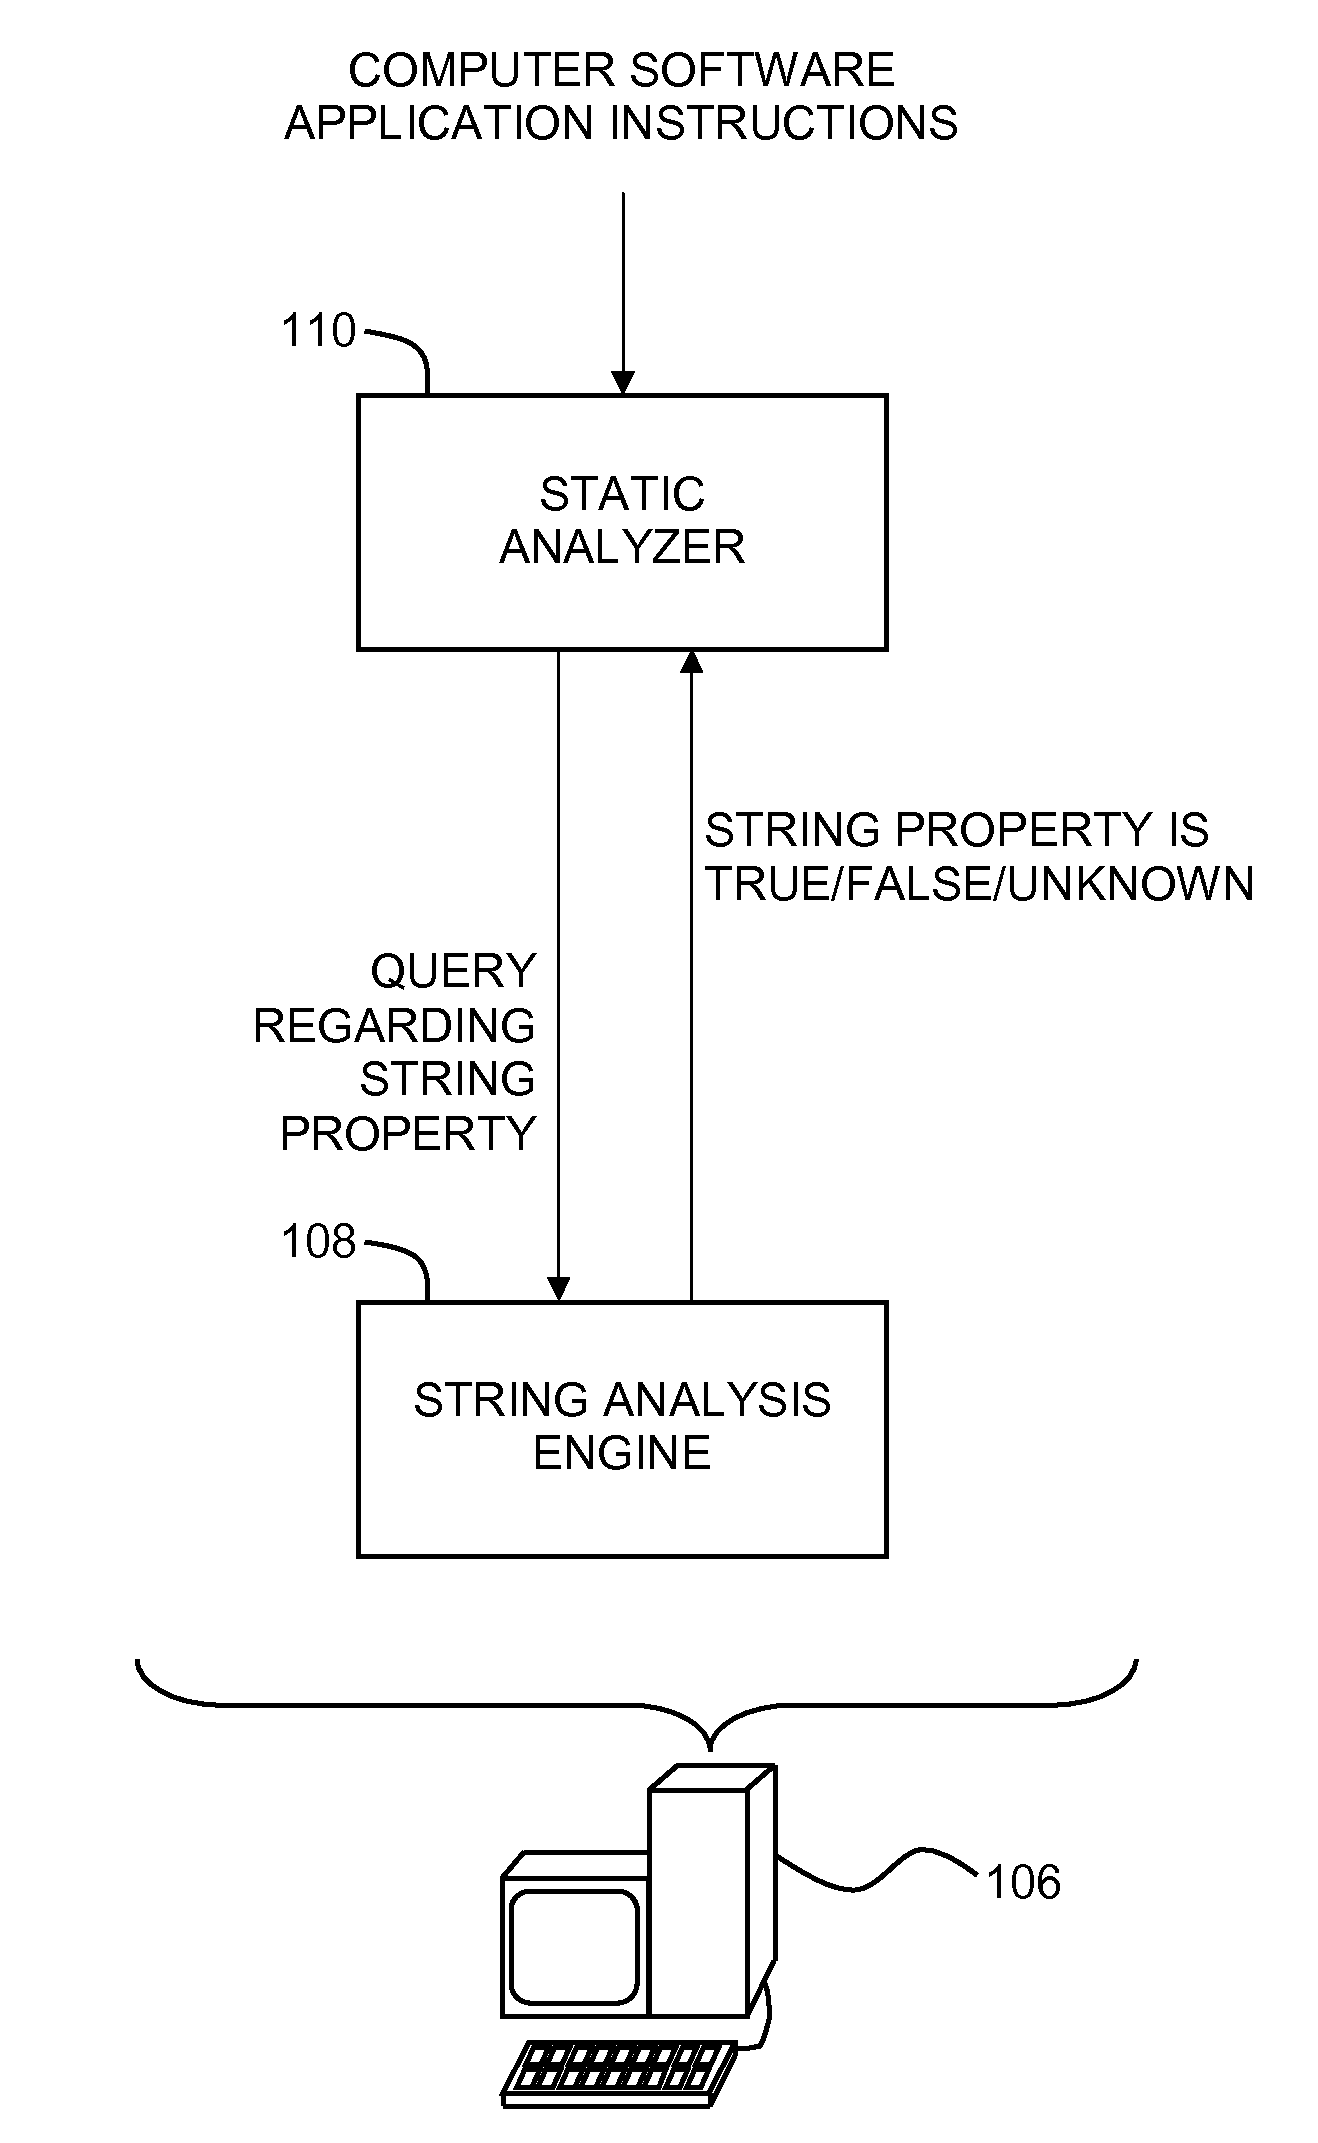 String analysis based on three-valued logic